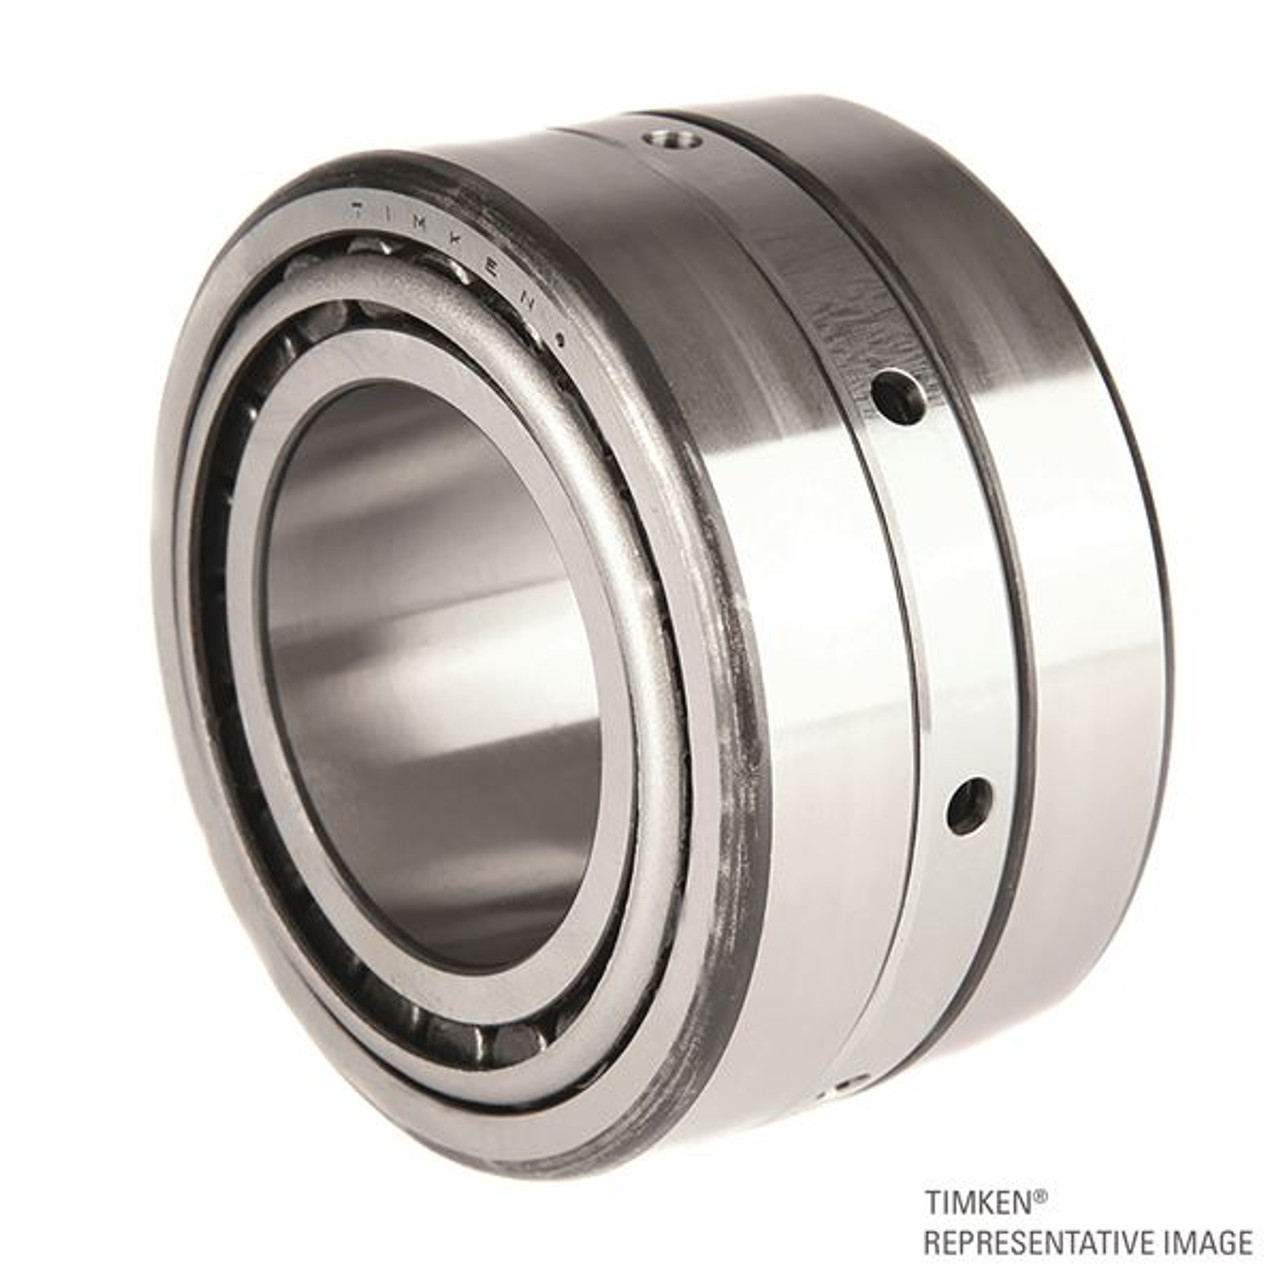 Timken® TDI Single Double Cone Assembly  HM237535-90136